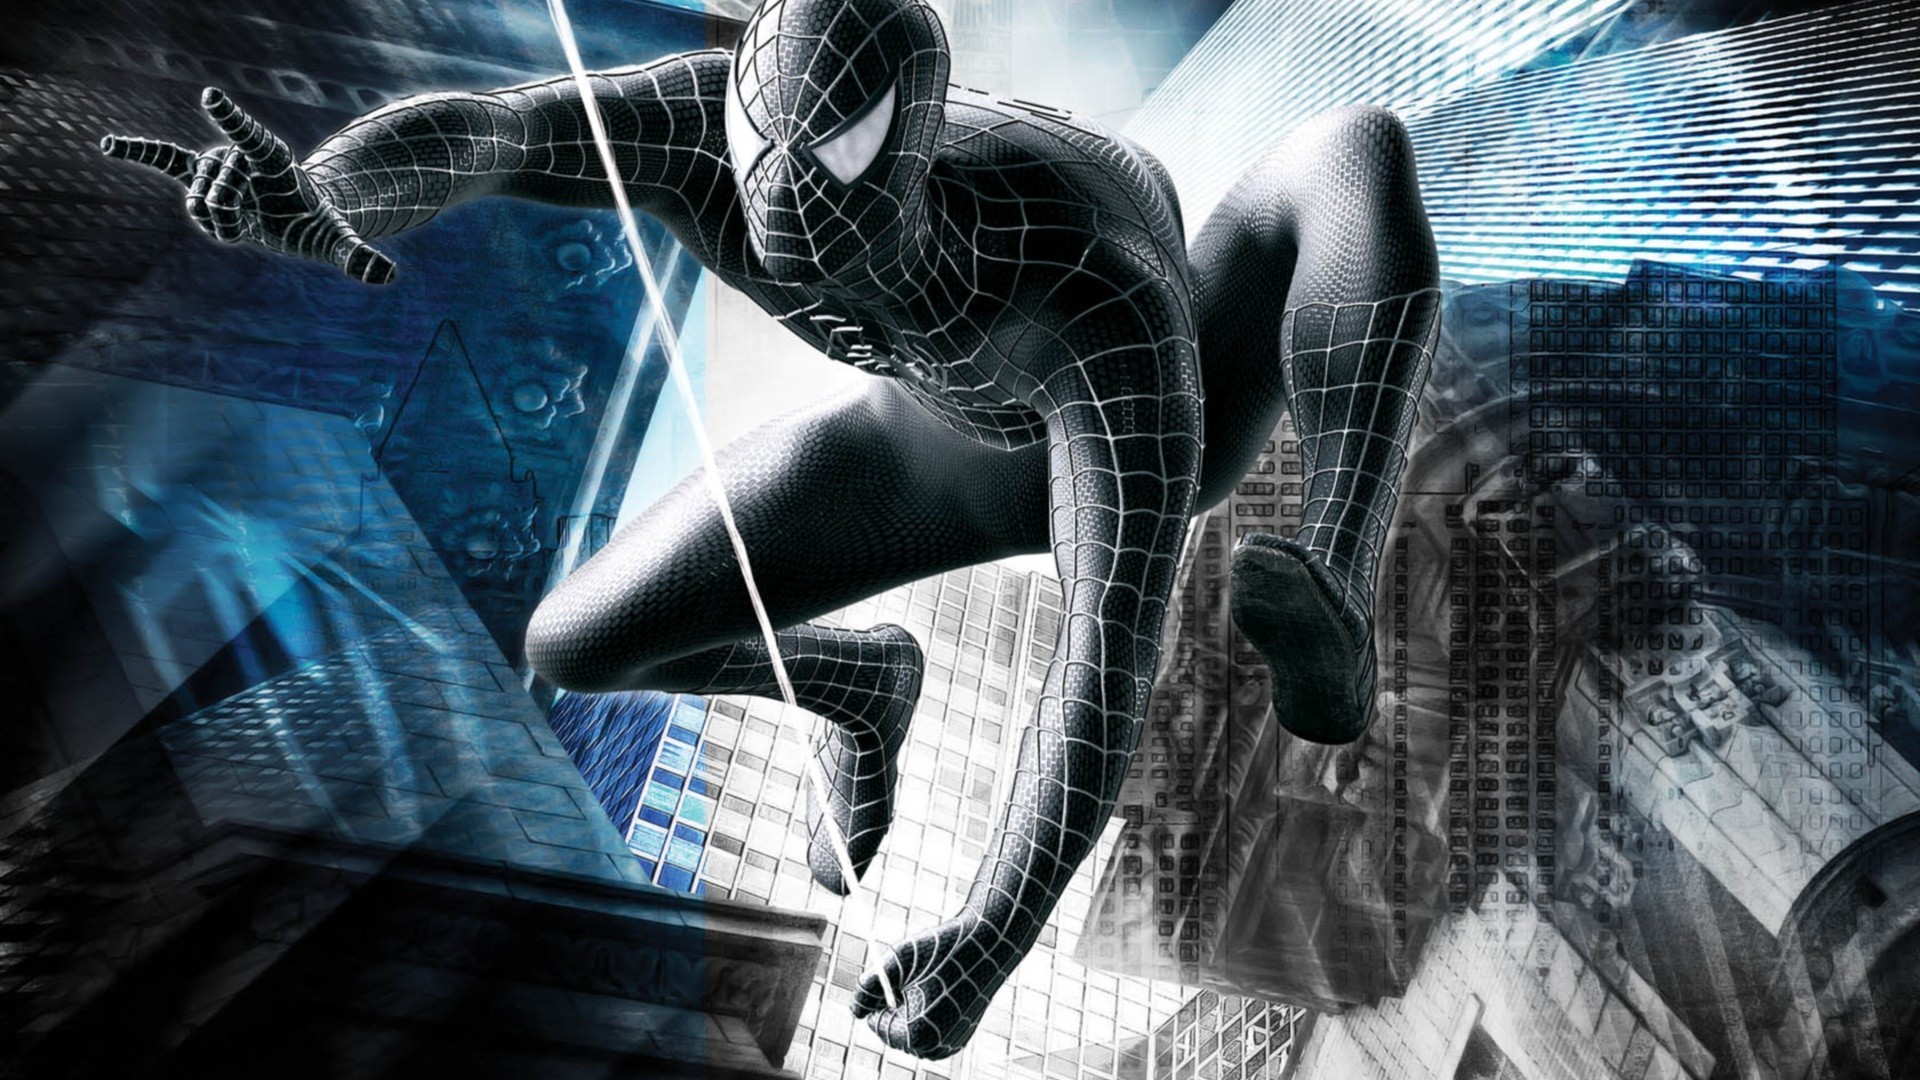 hombre araña 3 fondo de pantalla hd,hombre araña,cg artwork,personaje de ficción,diseño gráfico,diseño